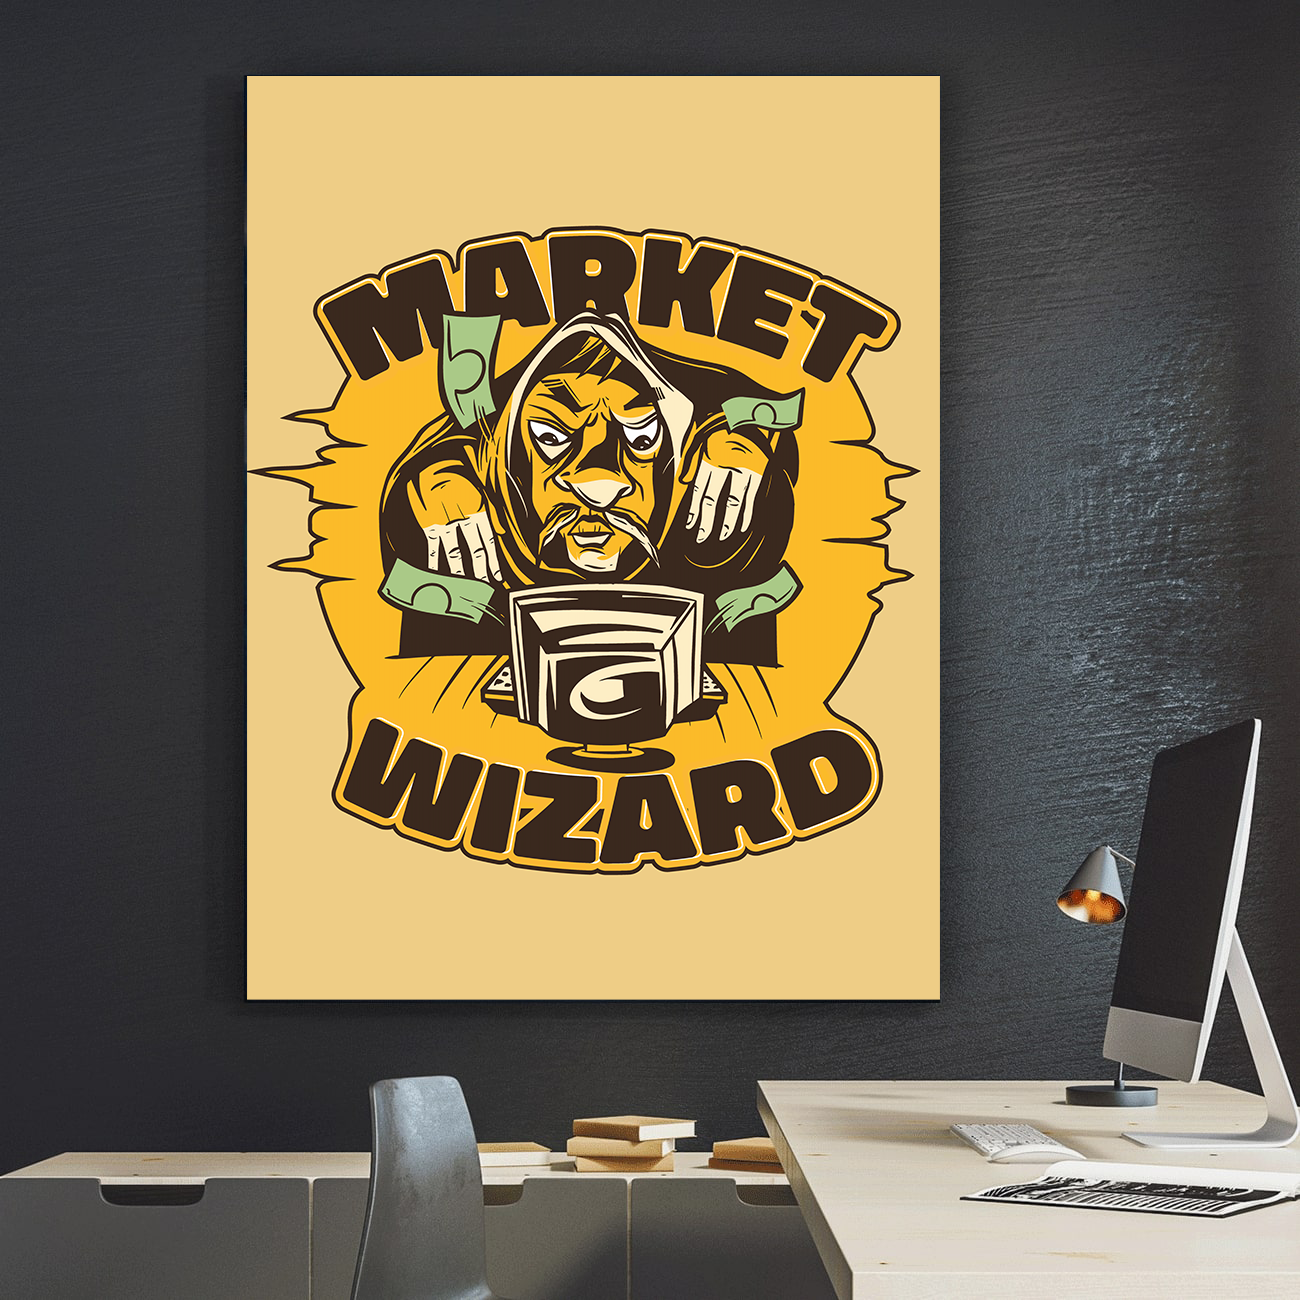 The Market Wizard